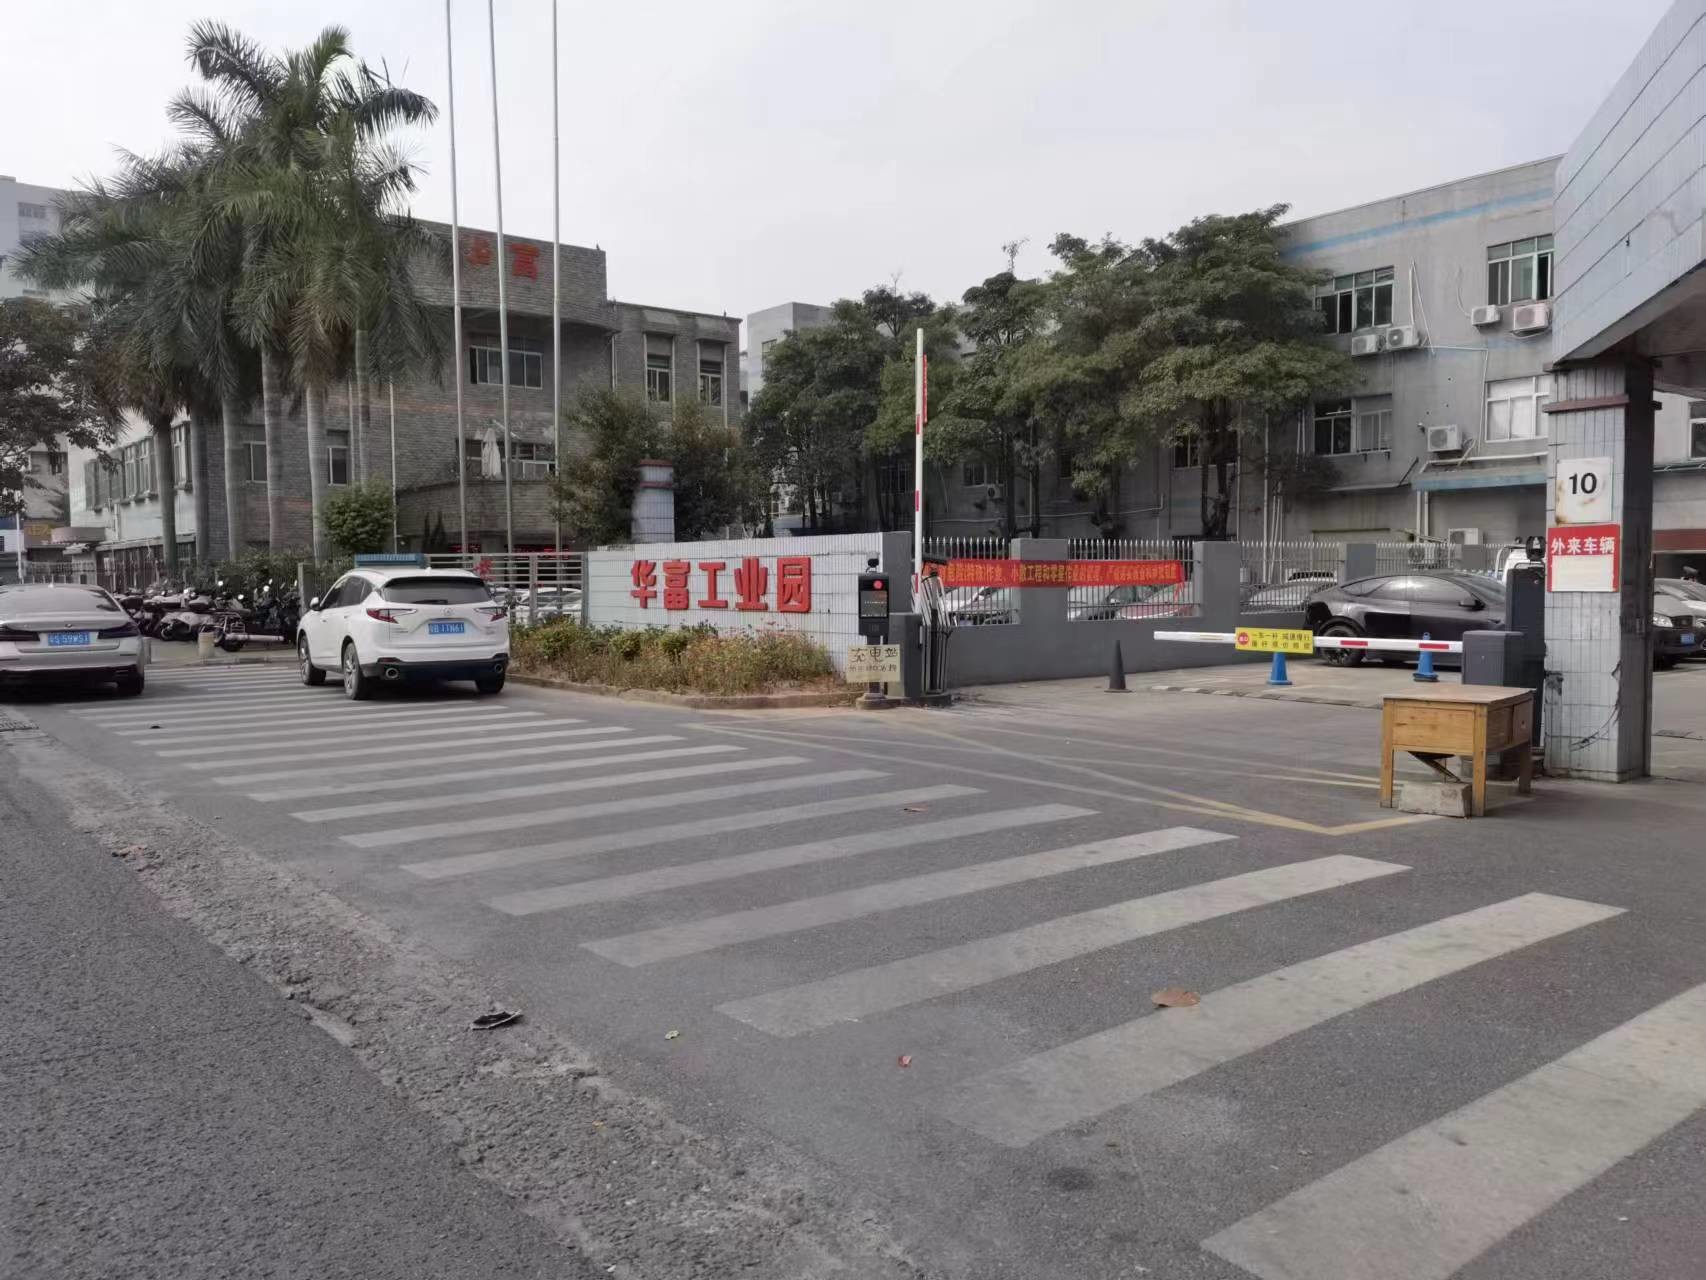 China Shenzhen Huafu Fast Multilayer Circuit Co. LTD